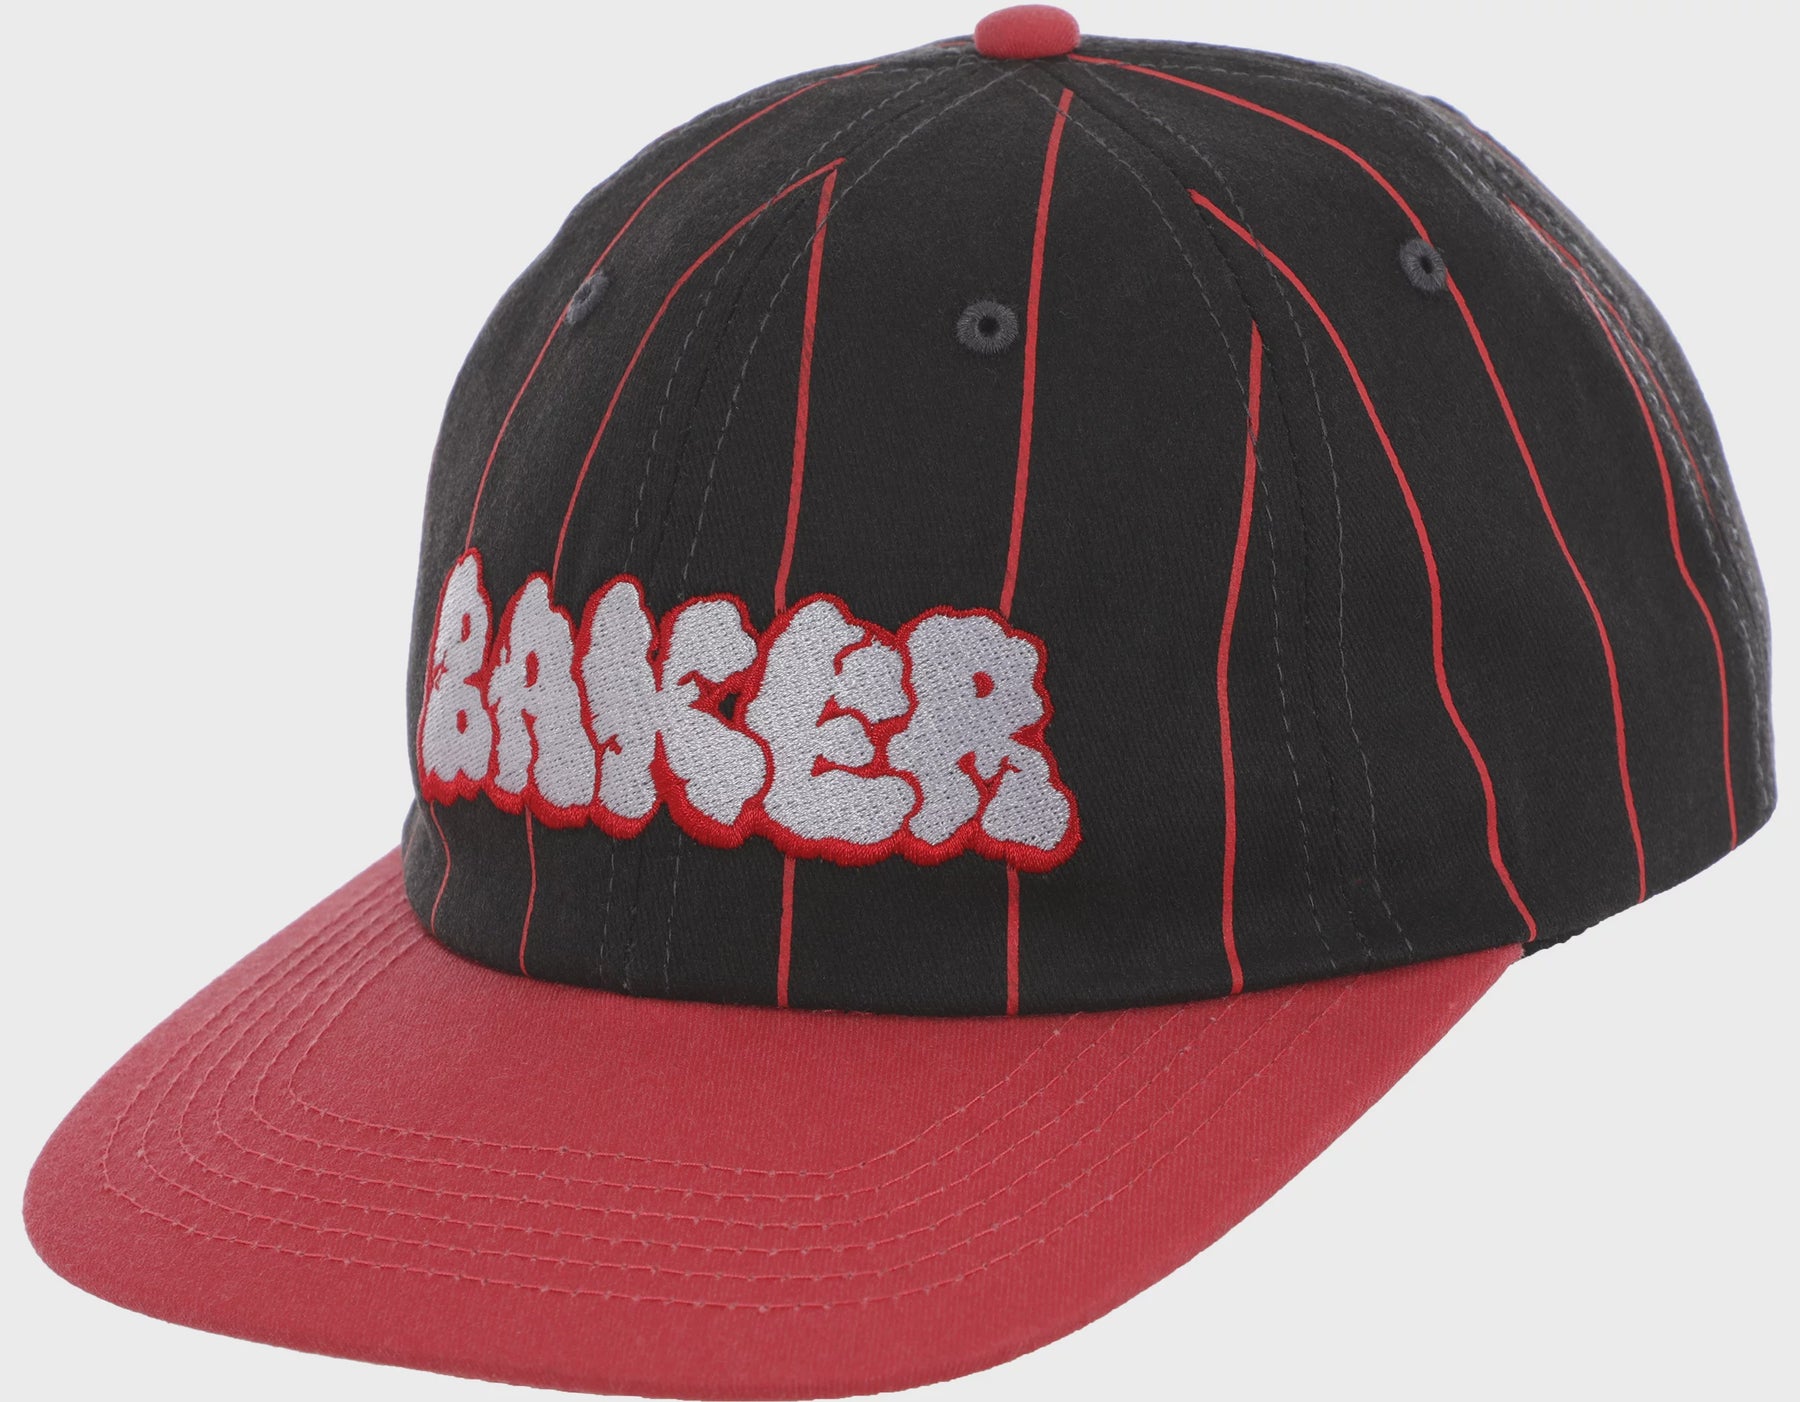 Baker Bubble Pin Black/Red Snapback Hat